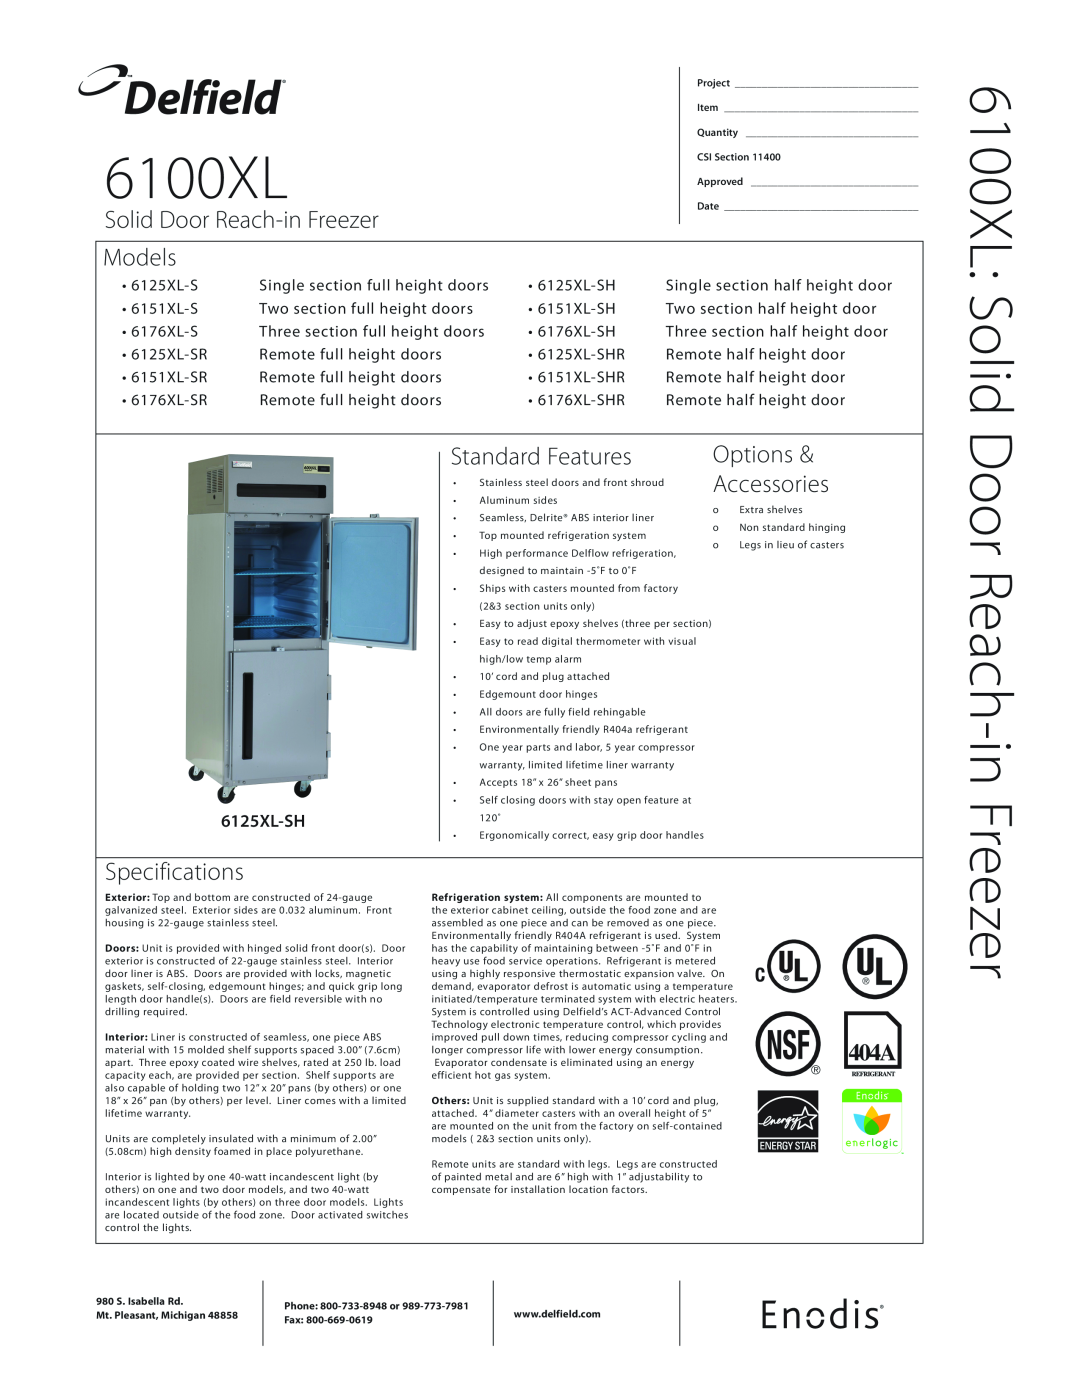 Delfield specifications 6100XL Solid, Delfield, Solid Door Reach-in Freezer, Models, Specifications, 6125XL-SH 